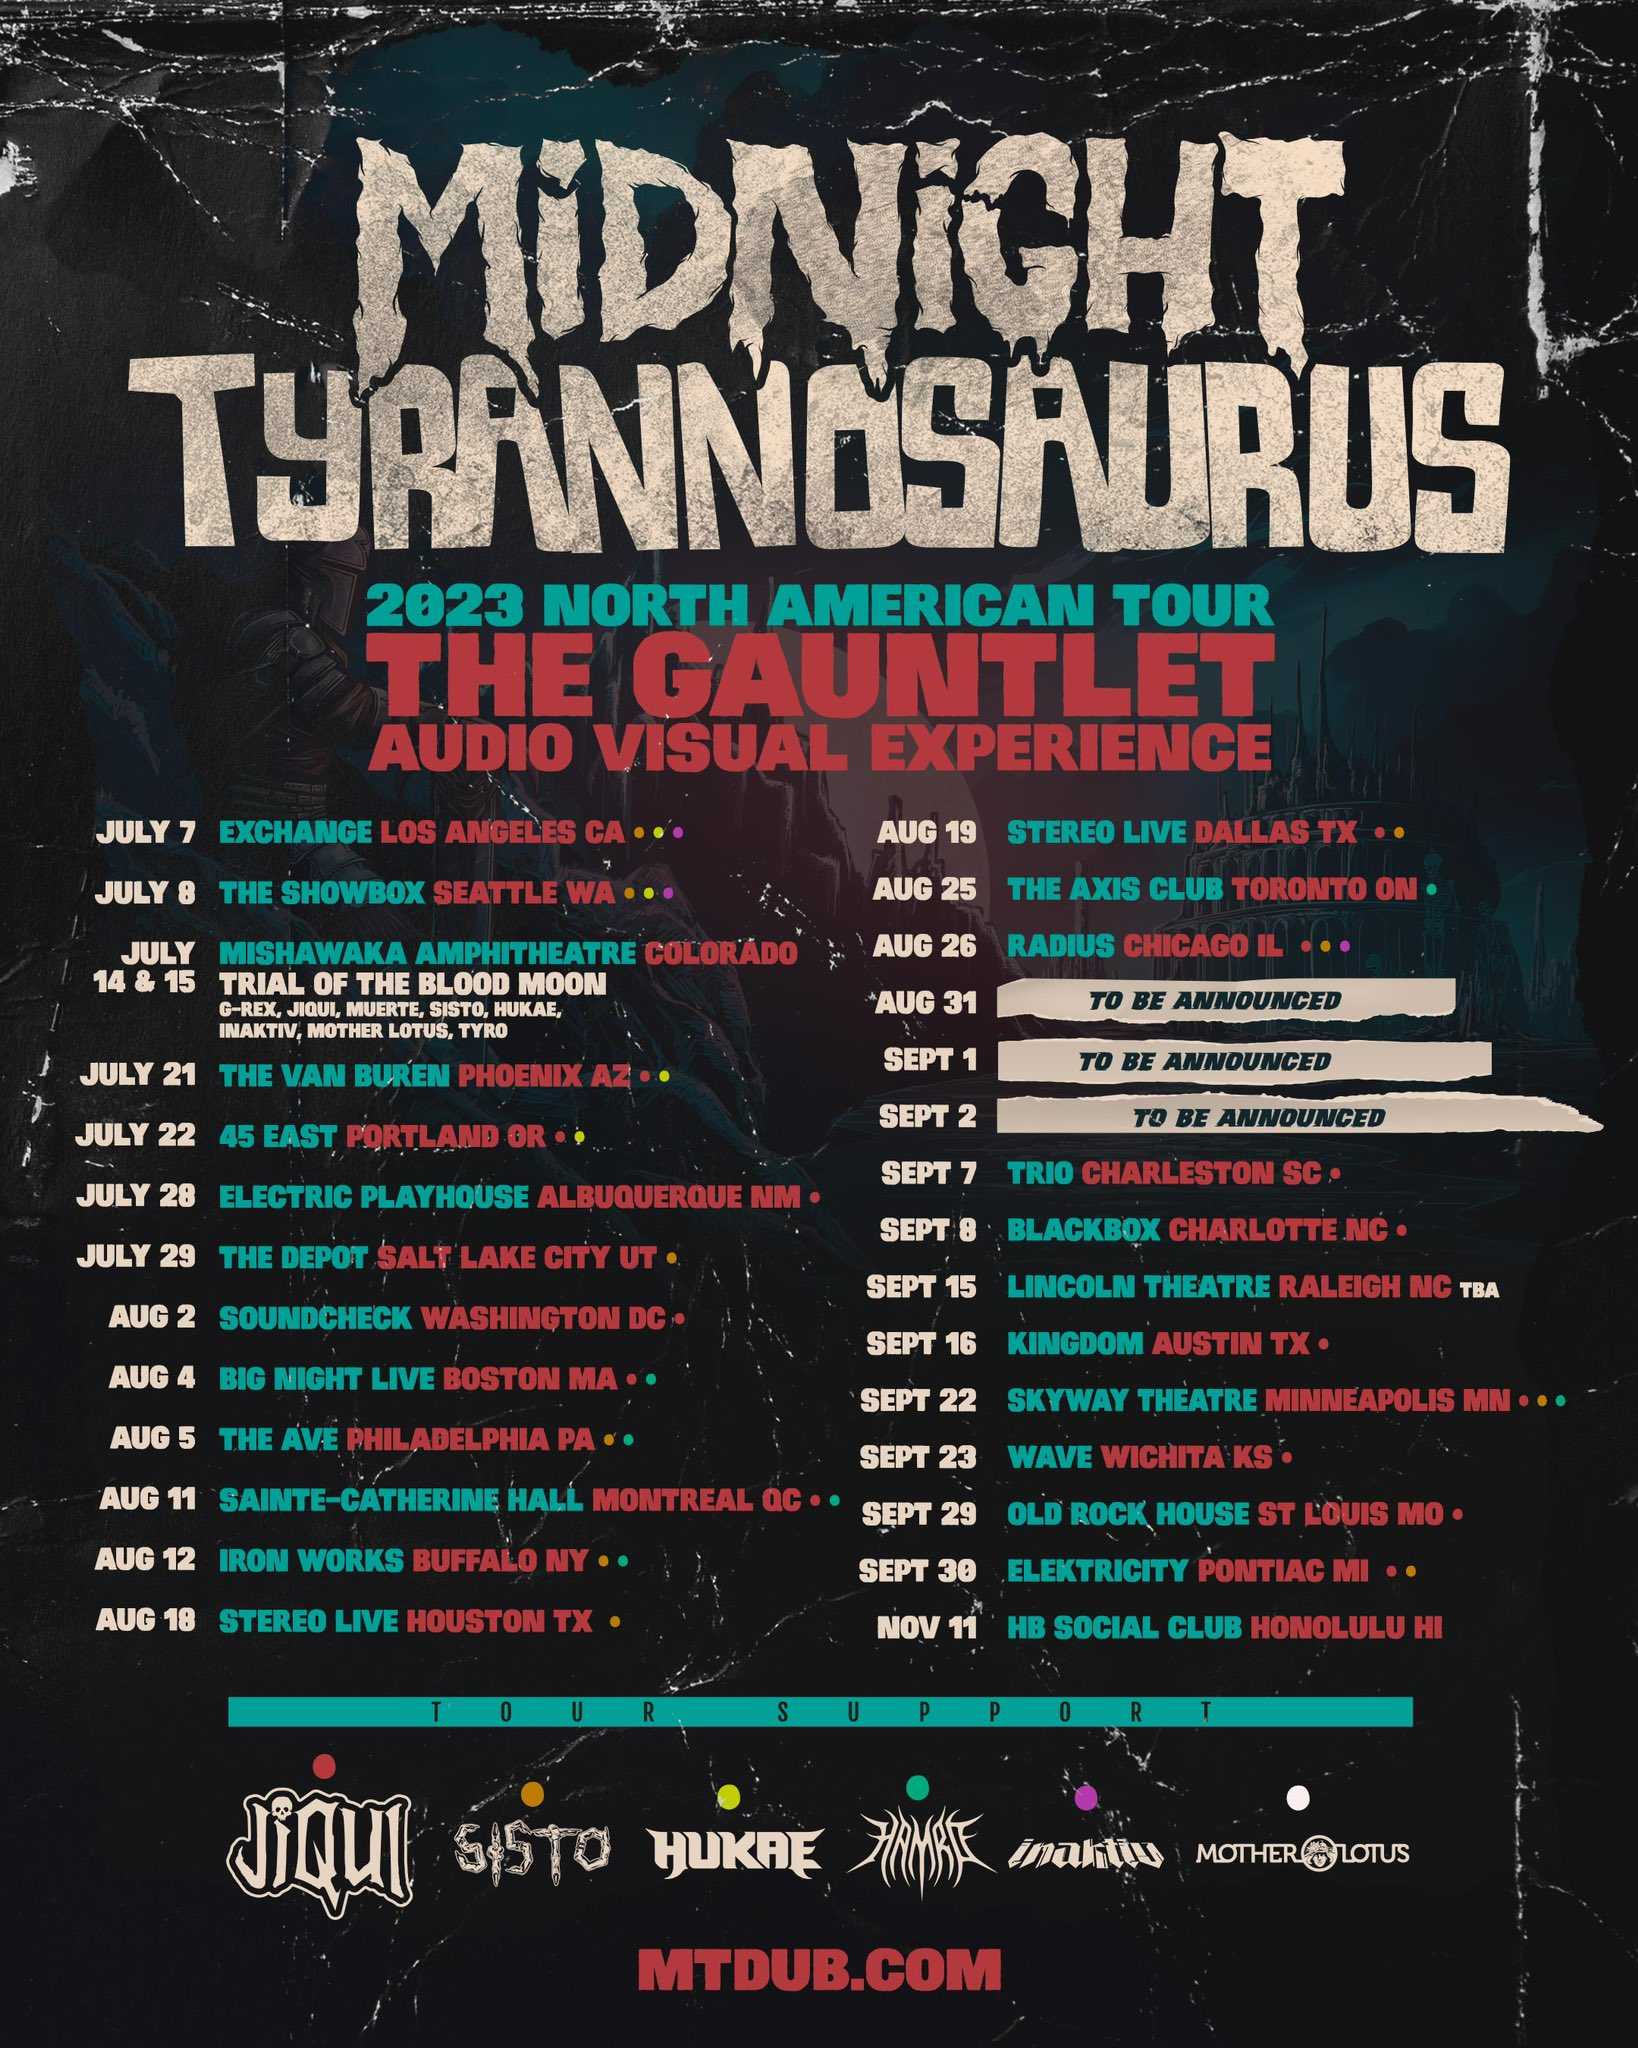 midnight-tyrannosaurus-the-gauntlet-tour-soundcheck-2023-08-02-washington